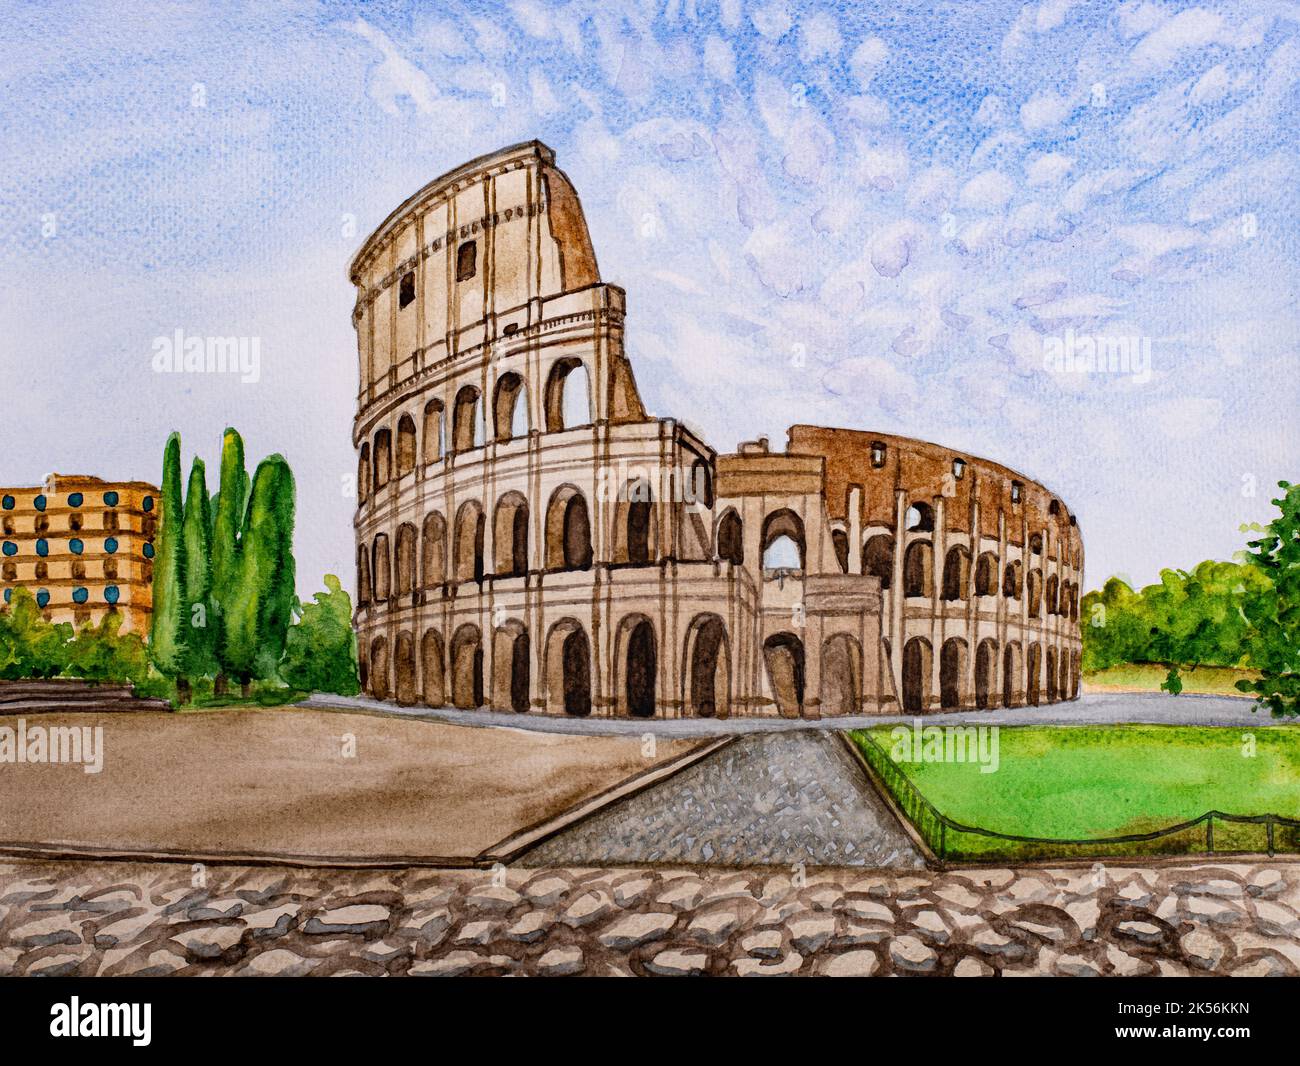 Colloseum watercolor painting, Rome, Italy Stock Photo